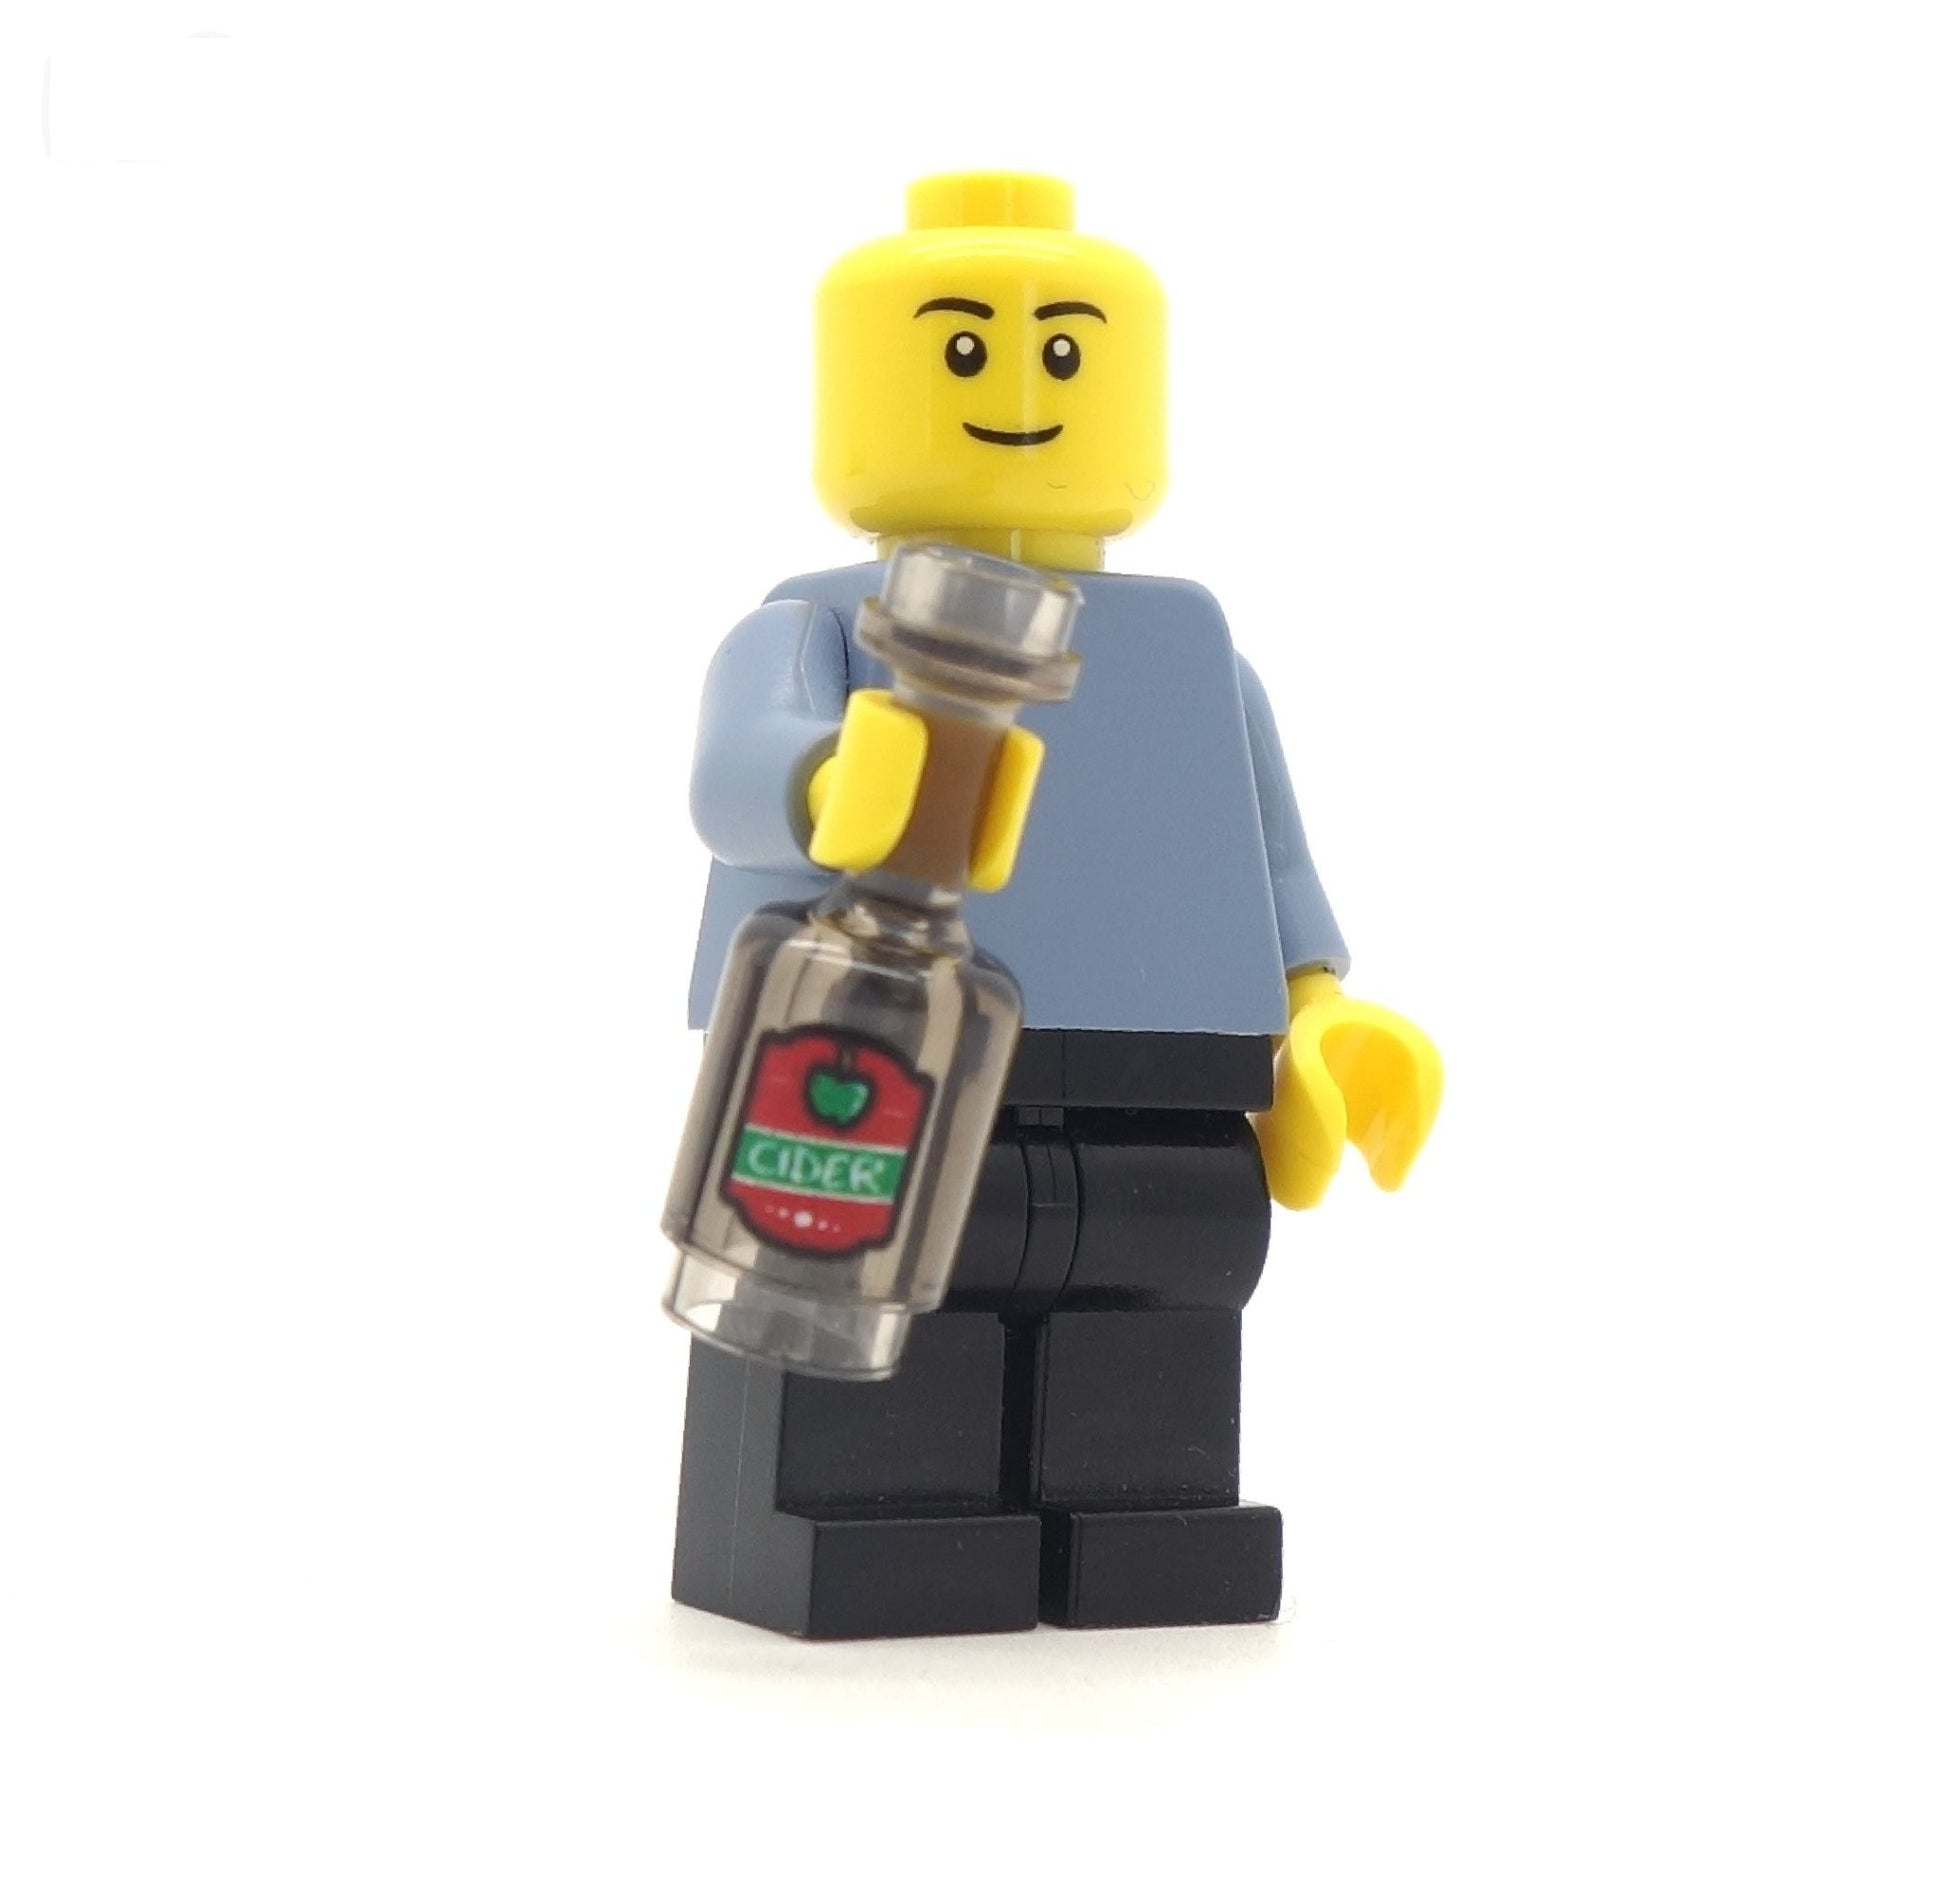 Bottle of Cider - Custom Printed LEGO Bottle